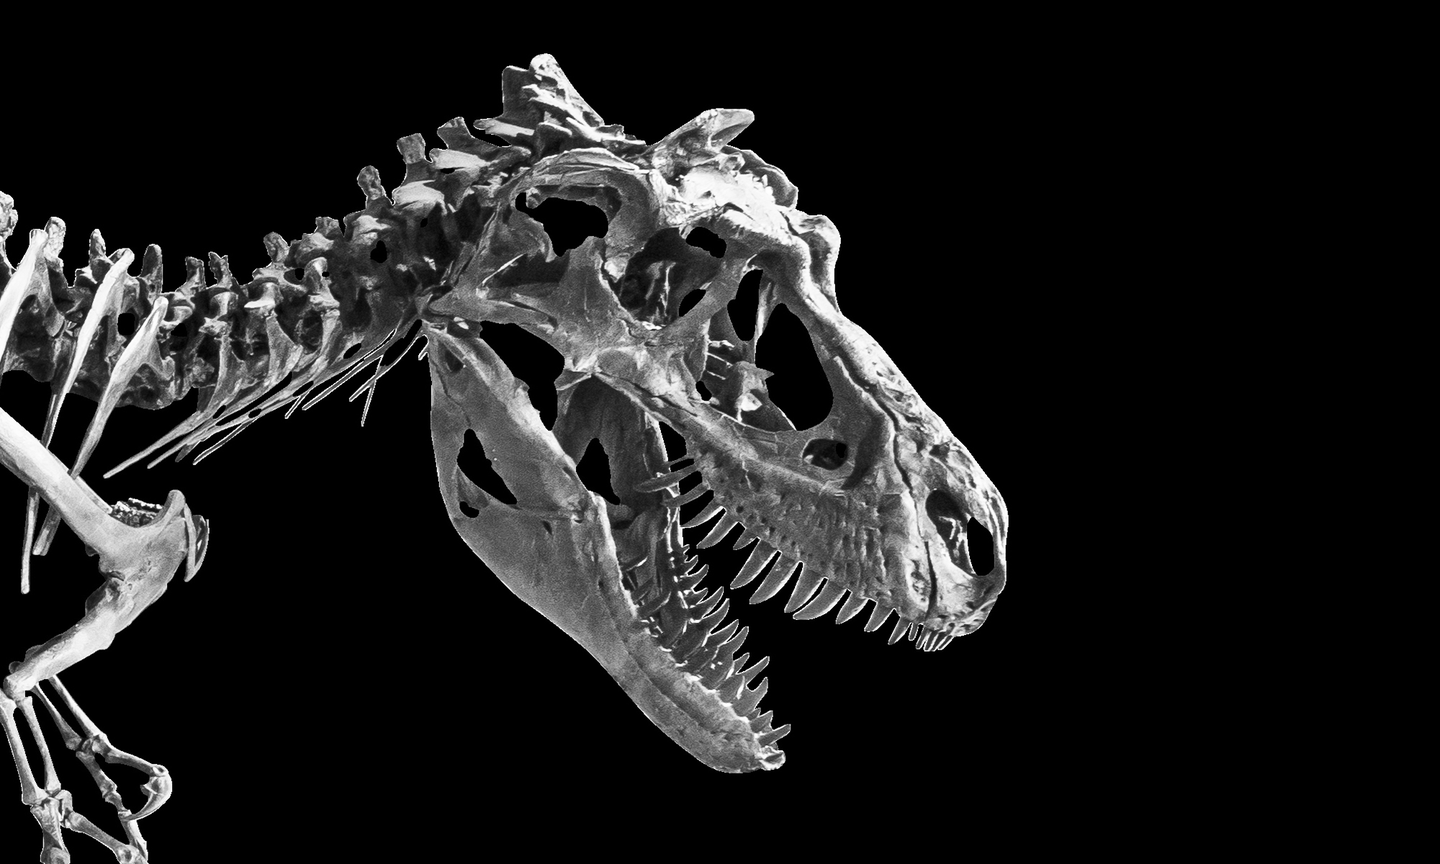 a t rex skeleton on a black isolated bakchround